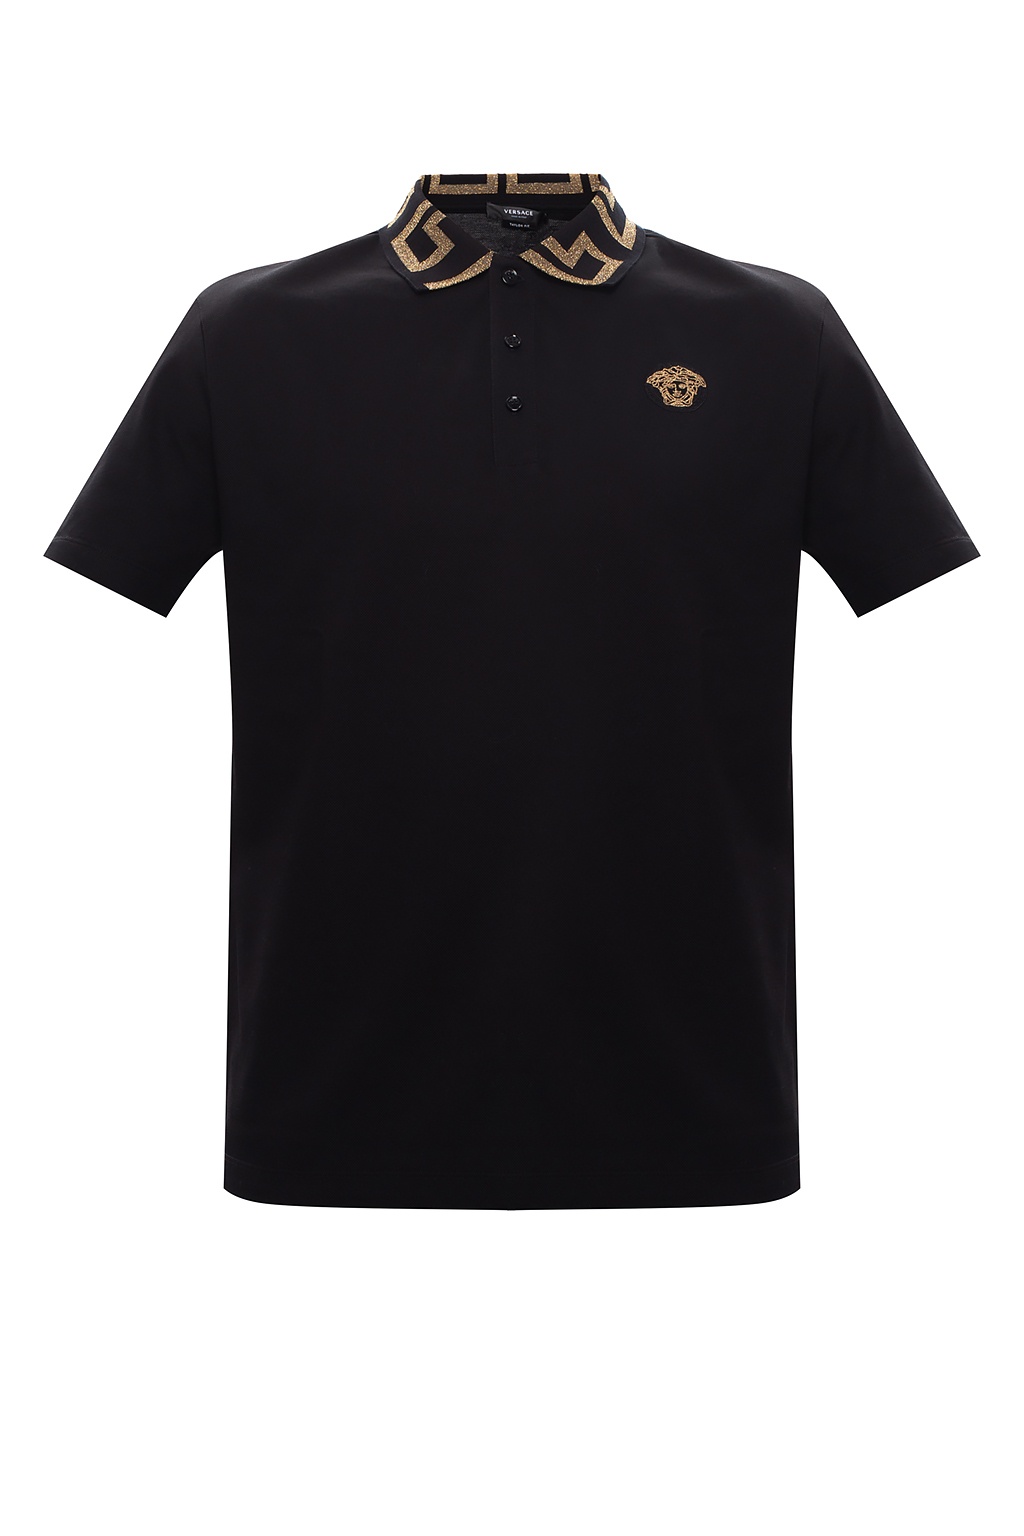 versace polo shirt black